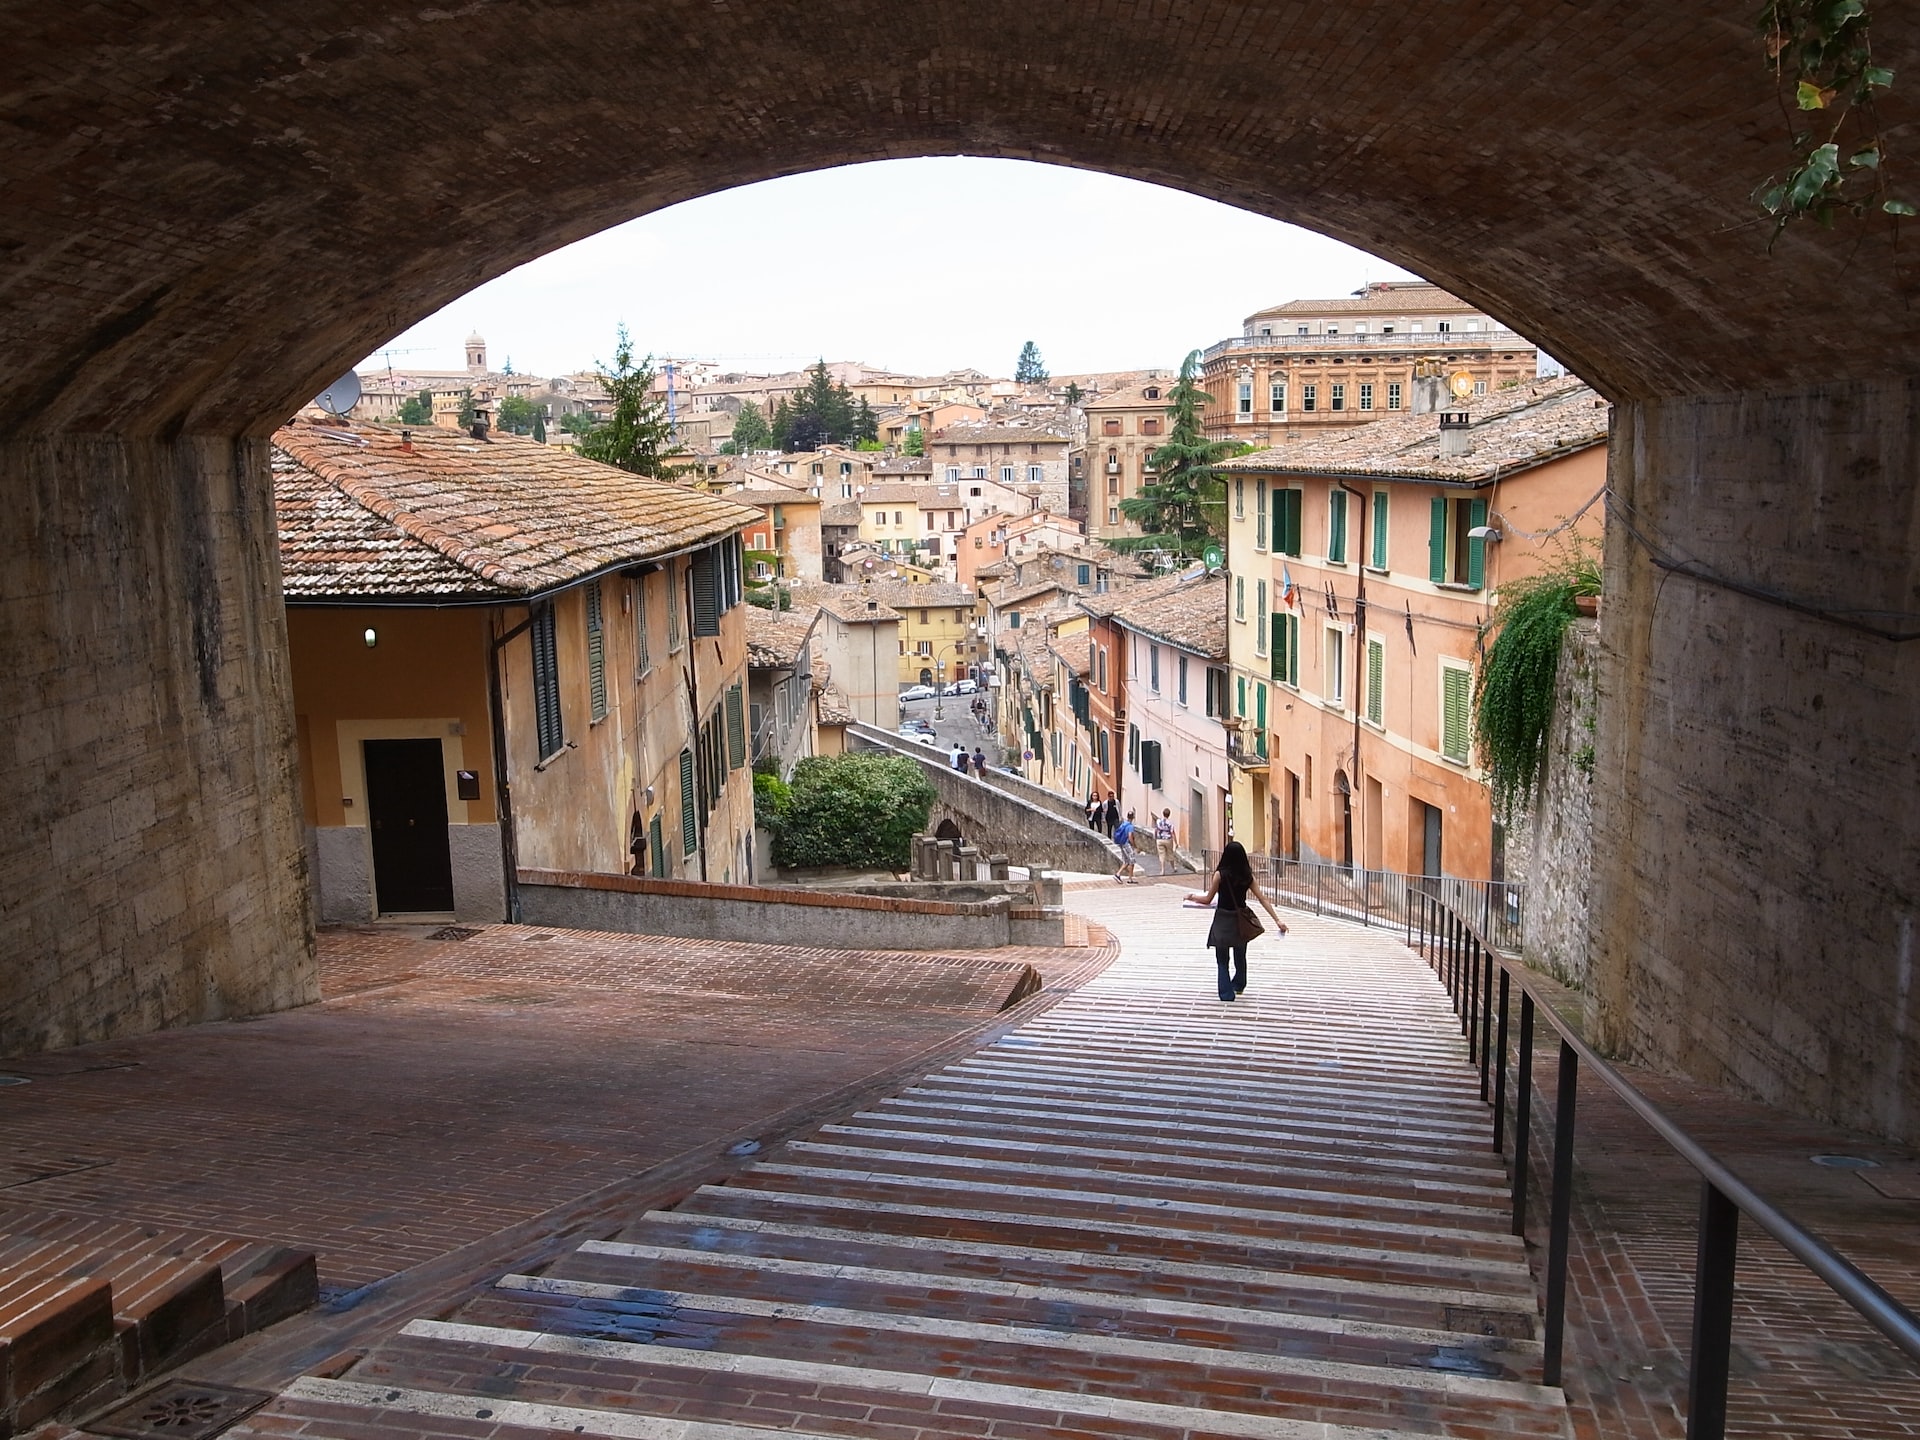 Perugia, best cities in Italy

